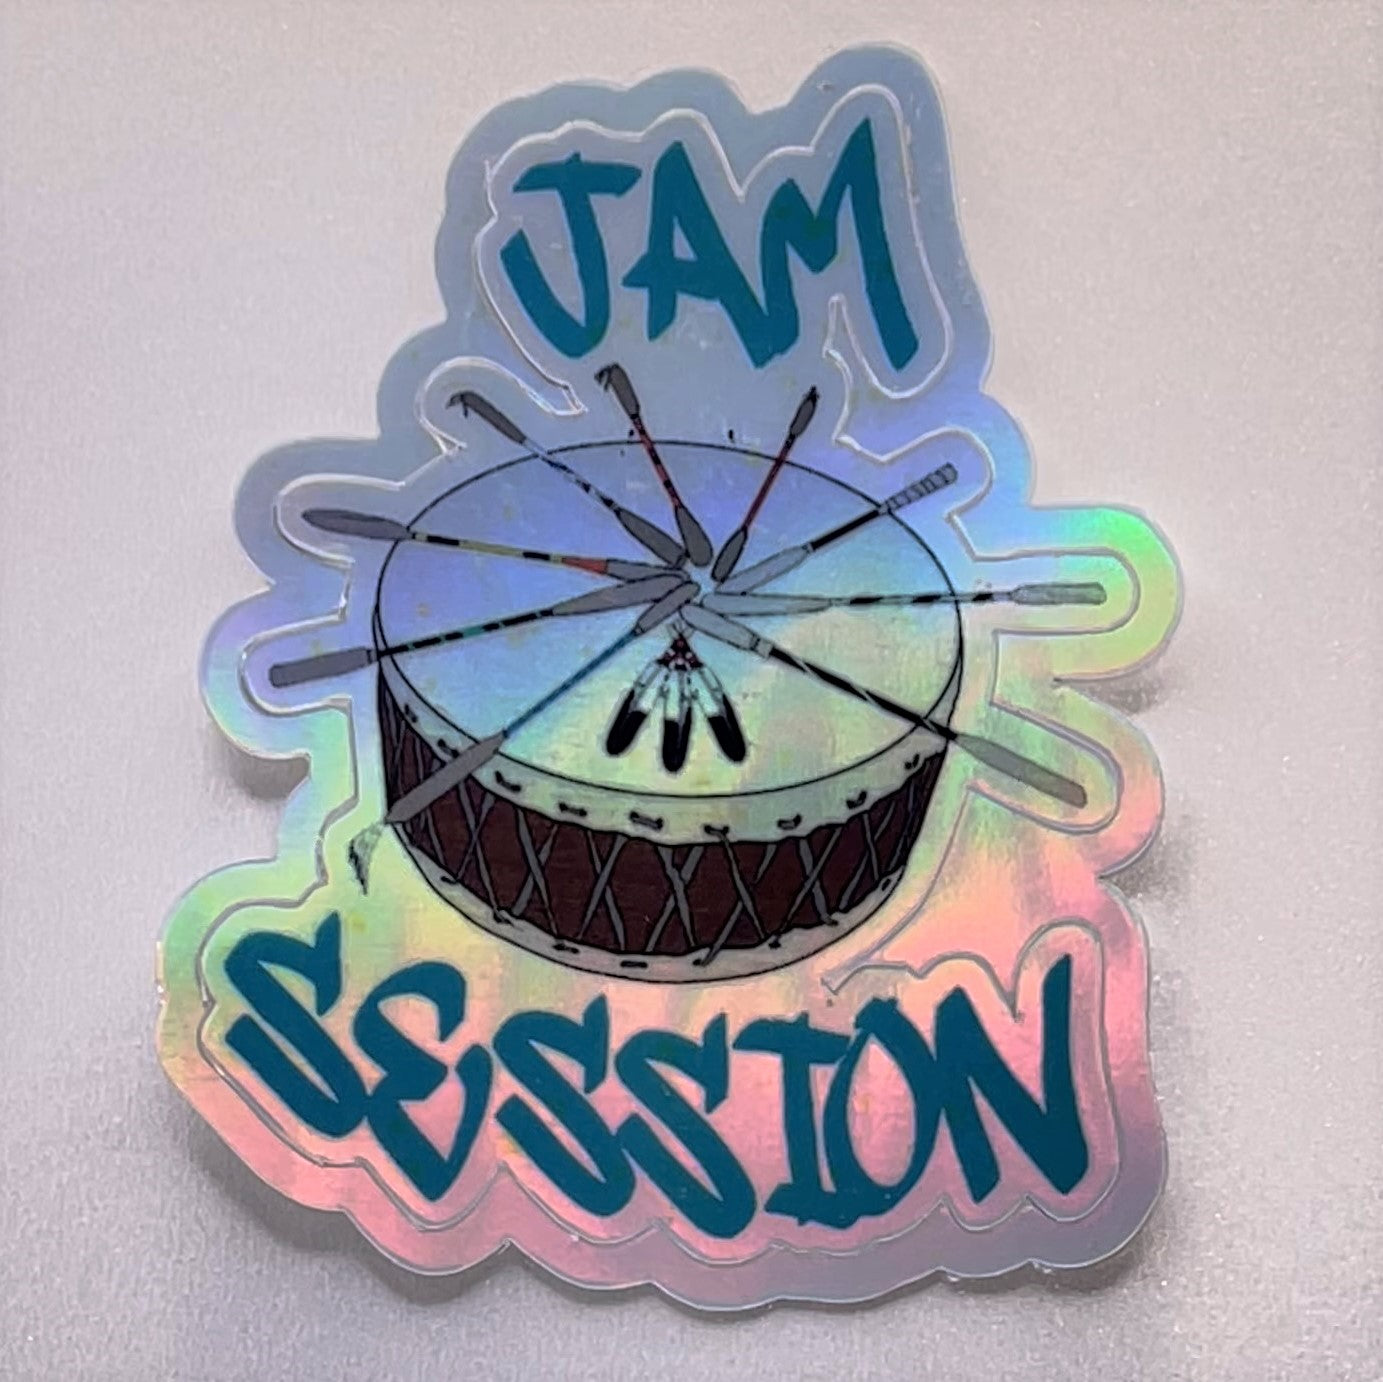 Jam Session 2 - Holographic Sticker